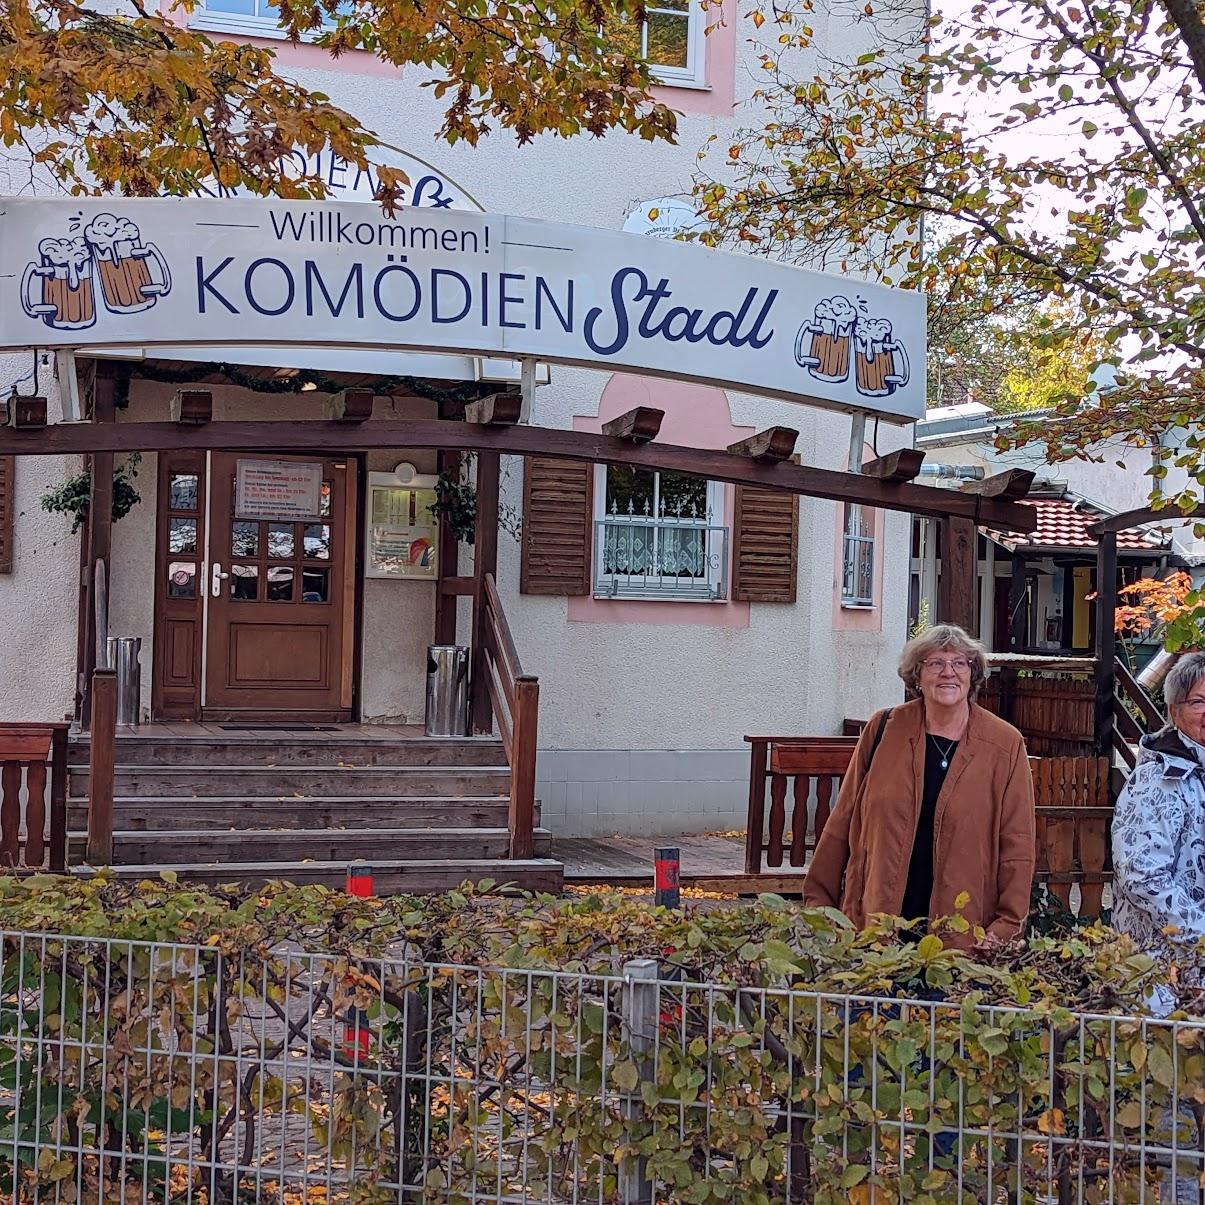 Restaurant "Komödienstadl" in Kassel